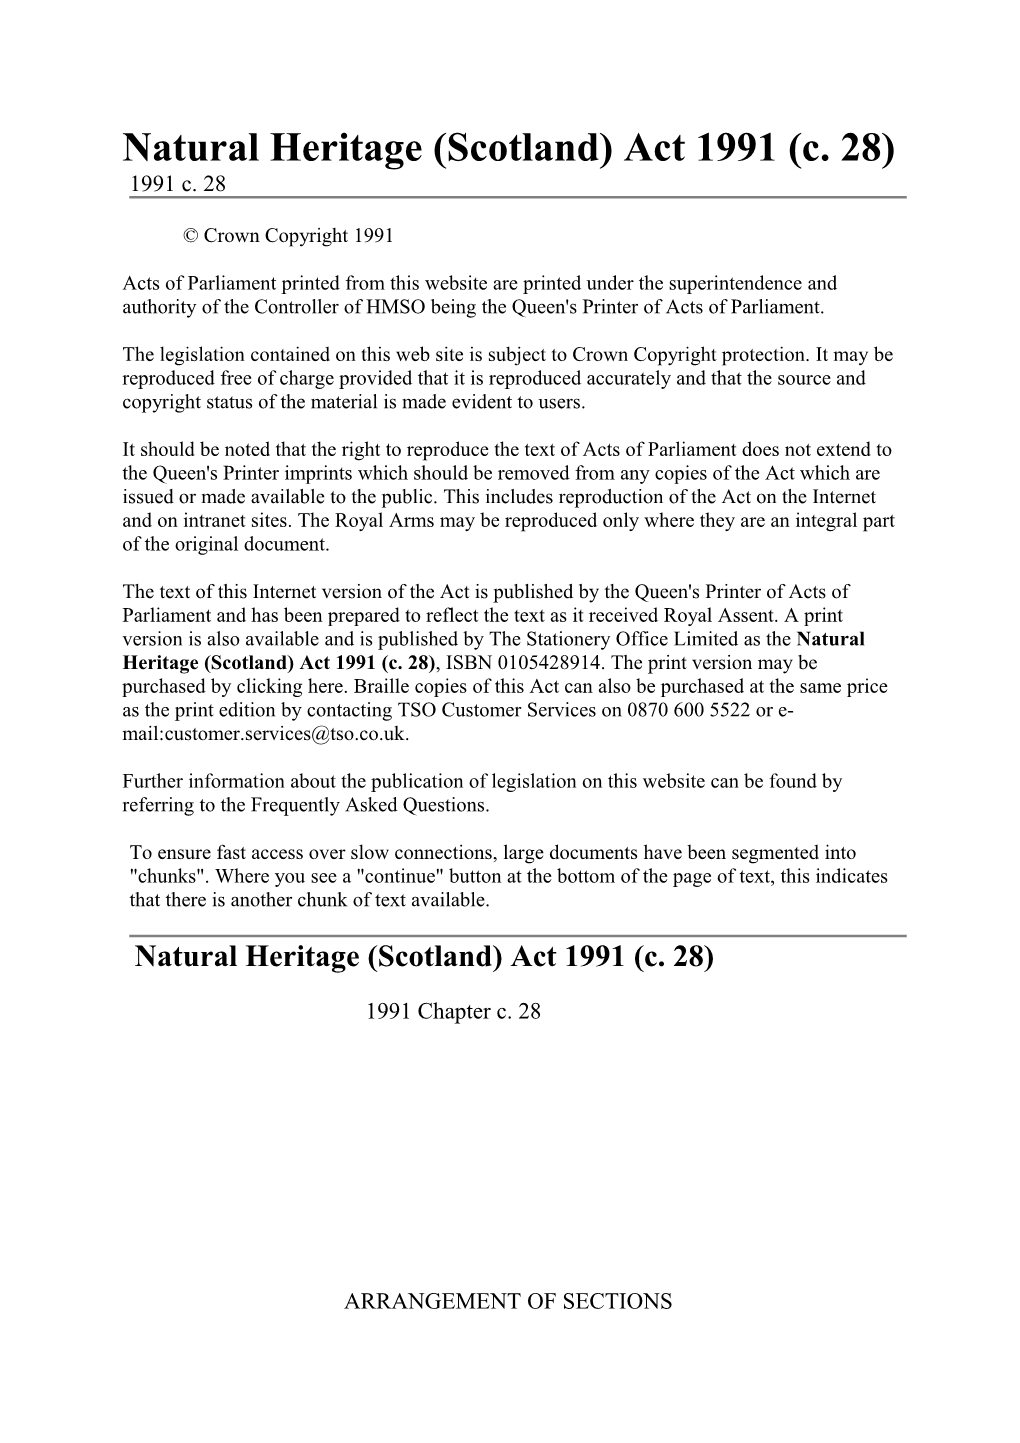 Natural Heritage (Scotland) Act 1991 (C